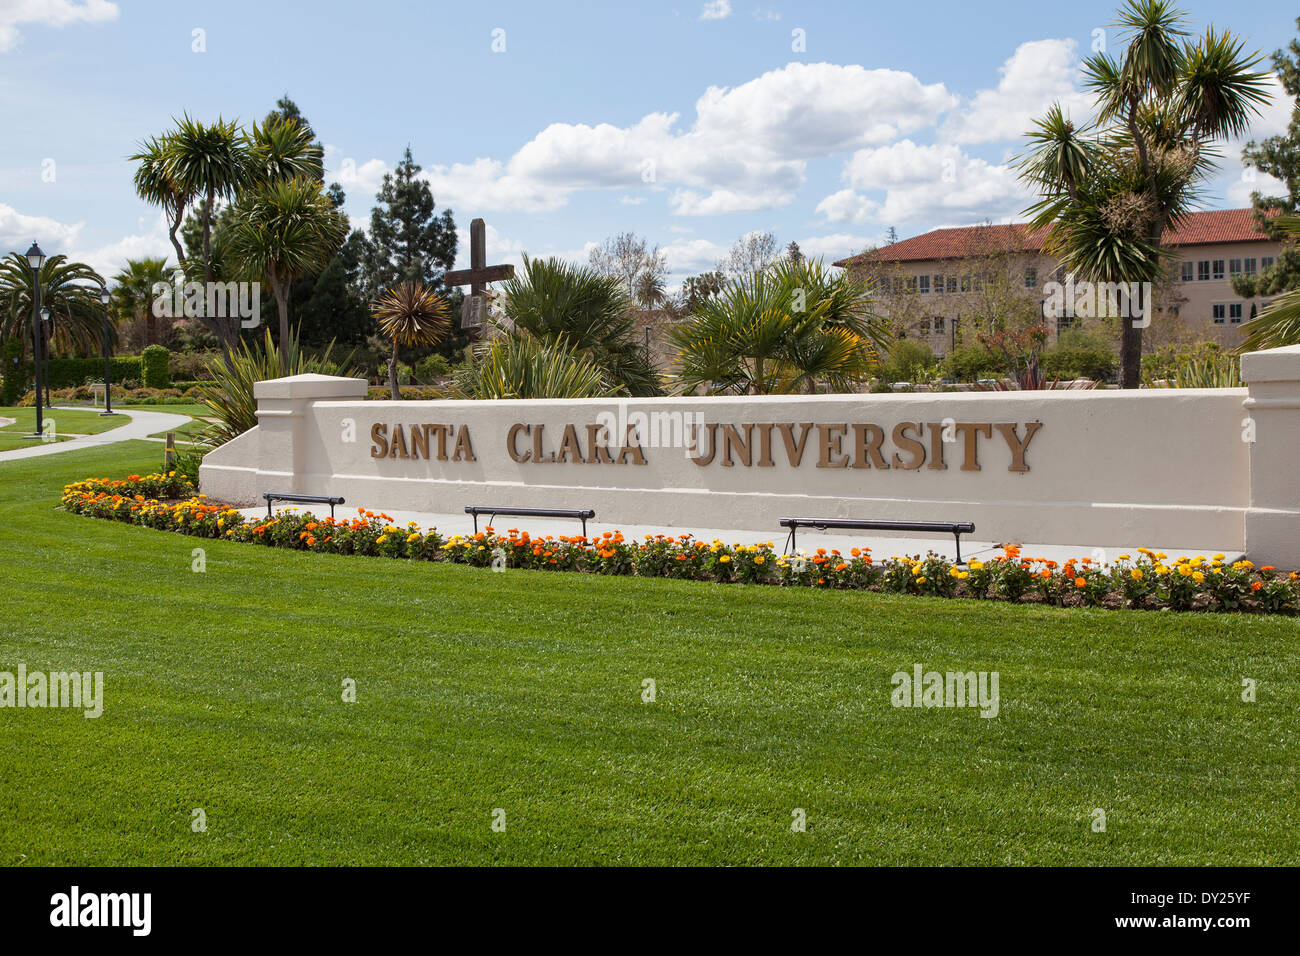 Santa clara university hi-res stock photography and images - Alamy